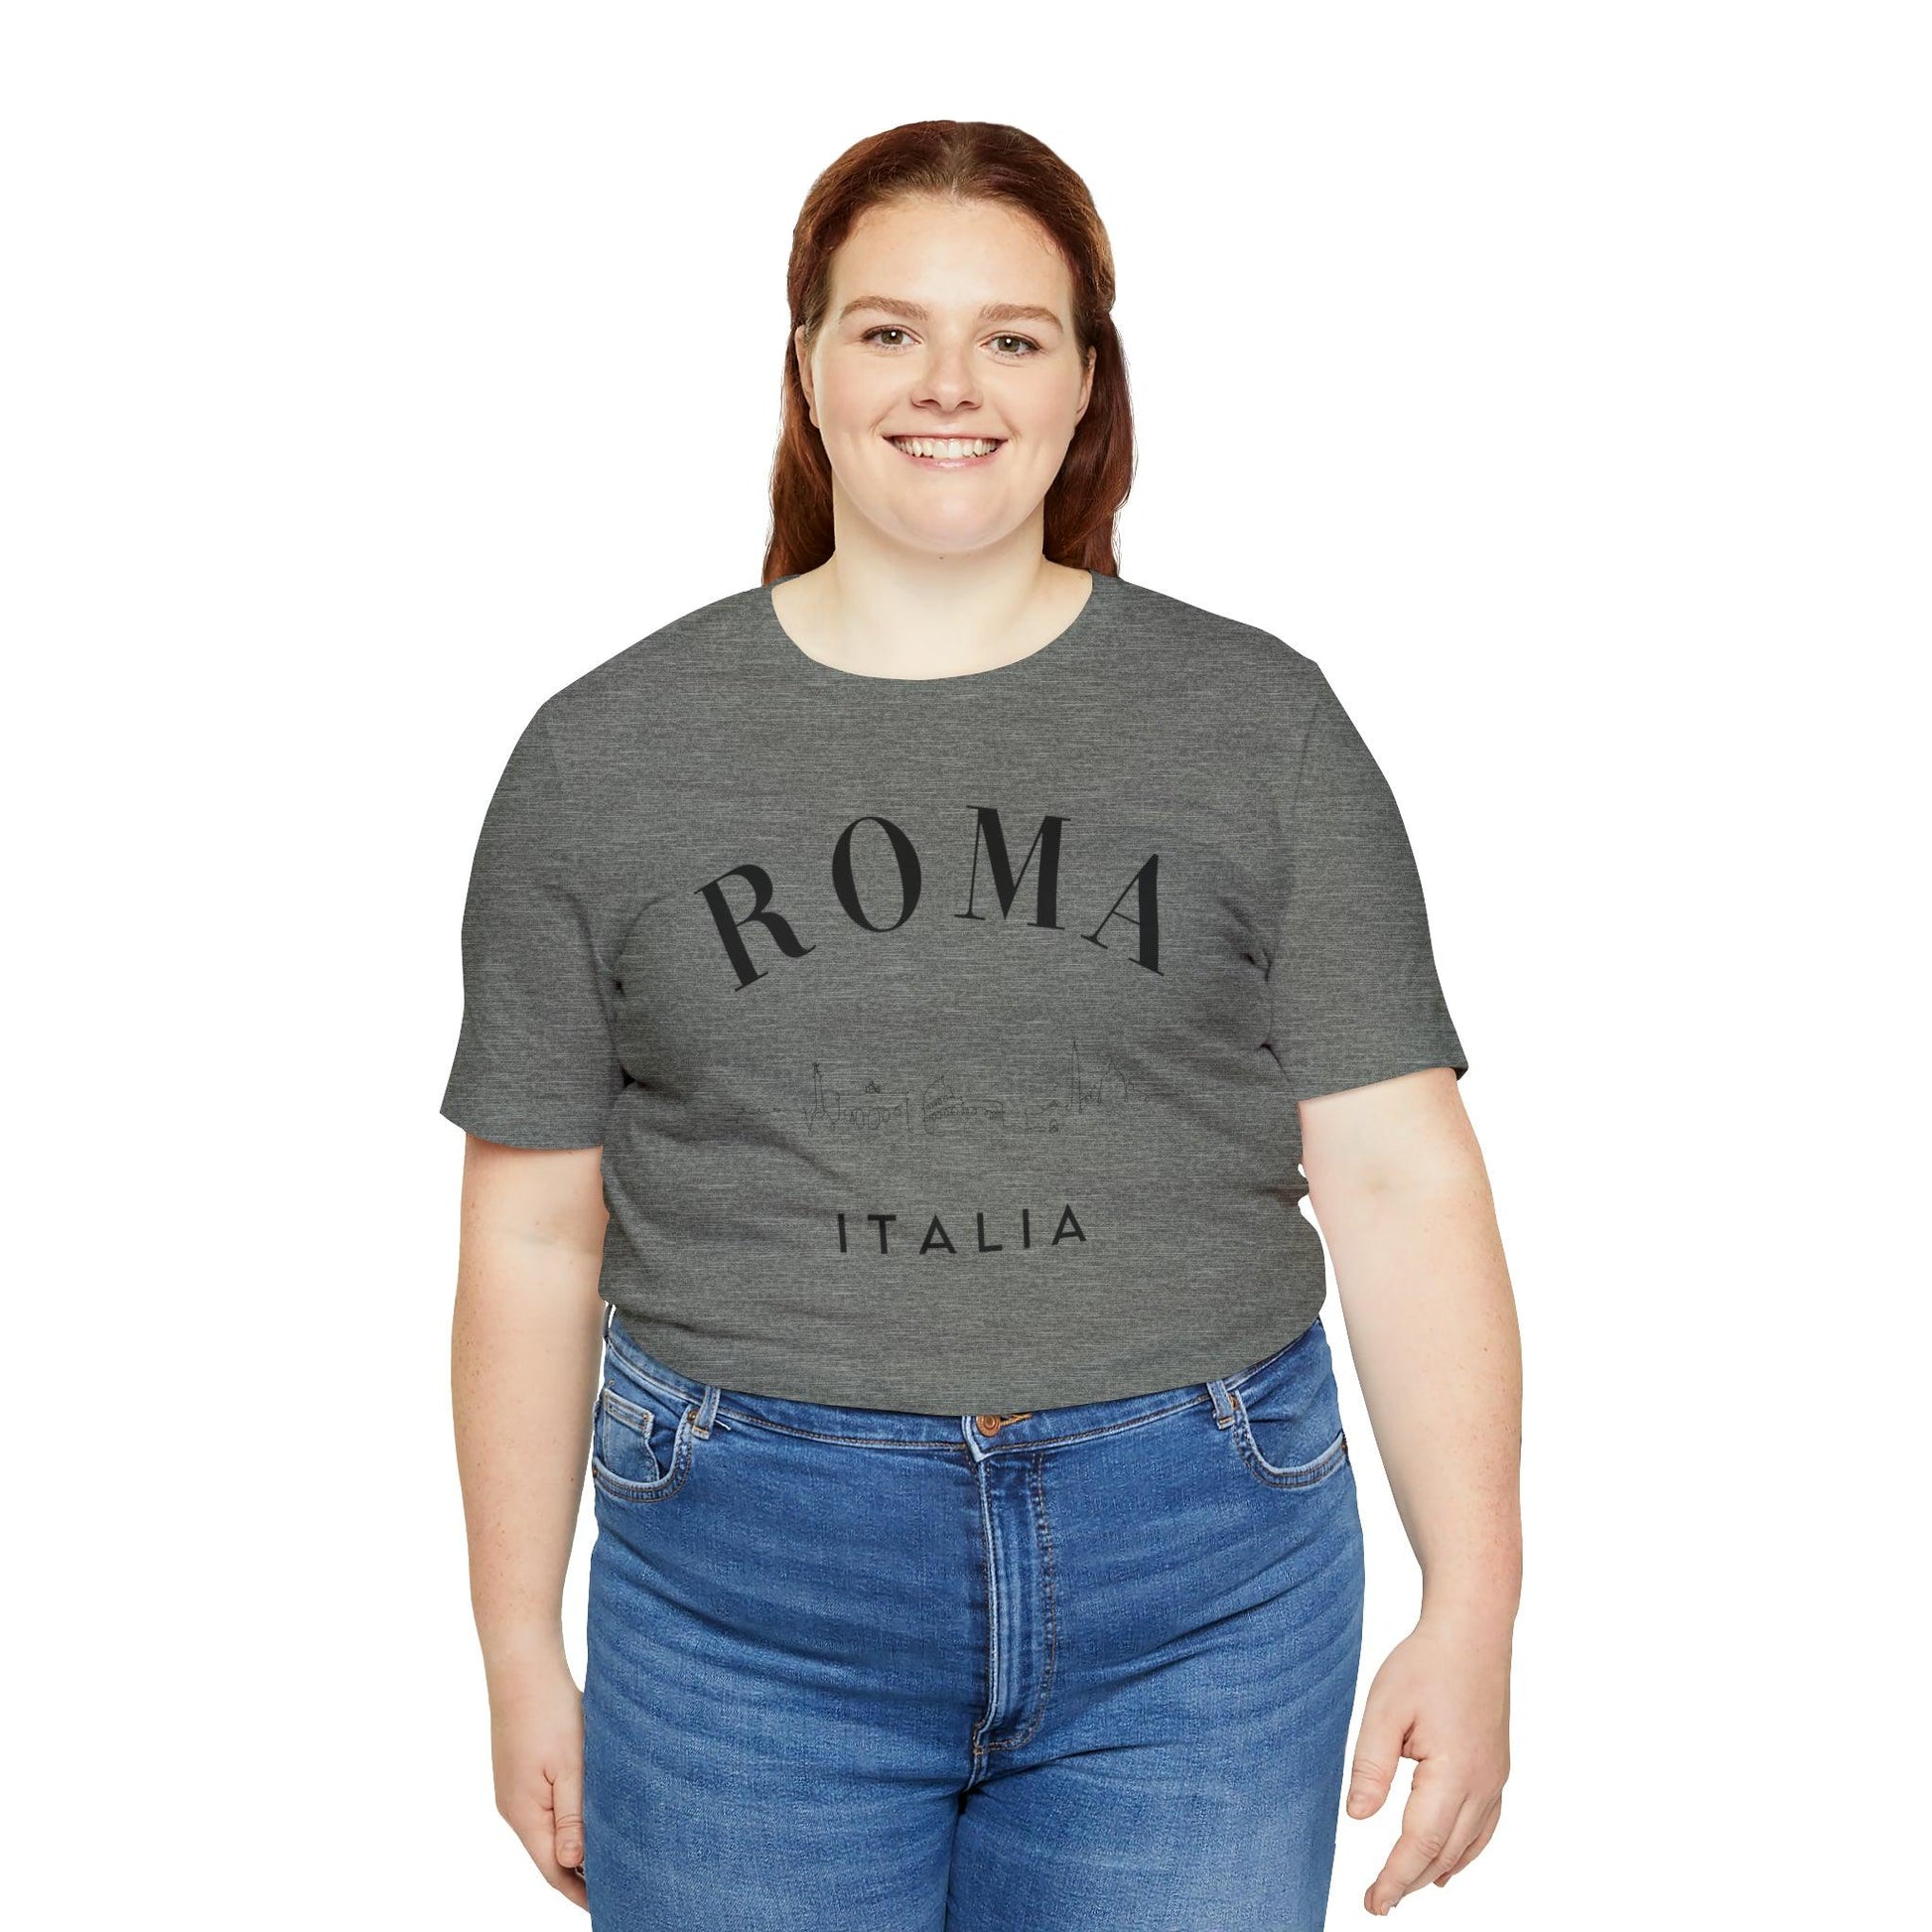 Roma Italia Shirt - BentleyBlueCo